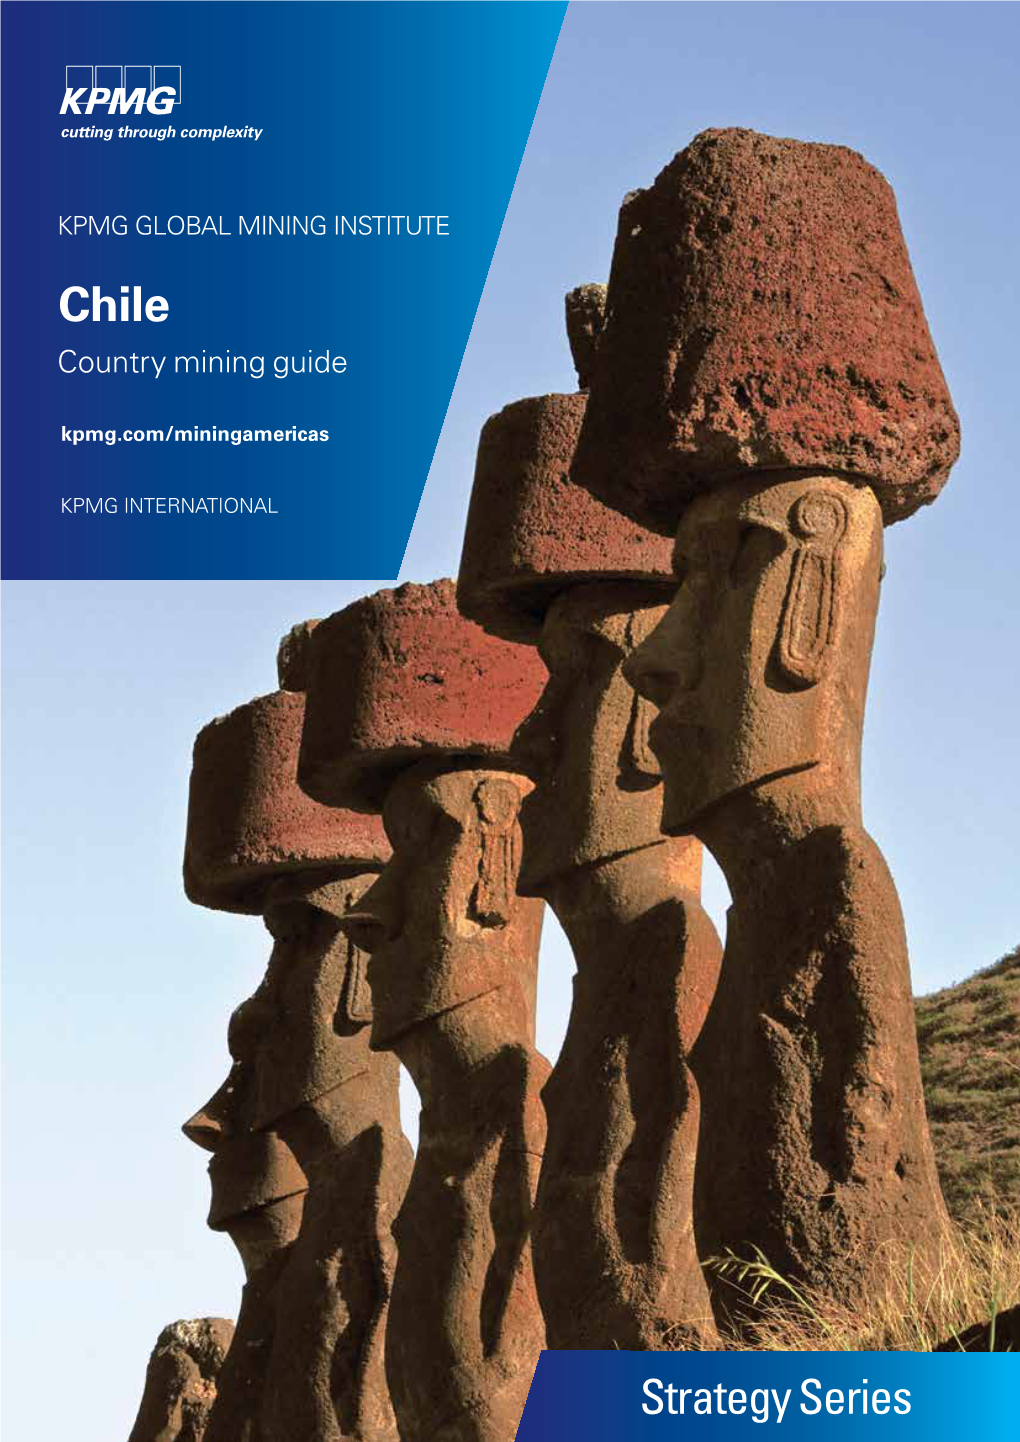 Chile Country Mining Guide Kpmg.Com/Miningamericas